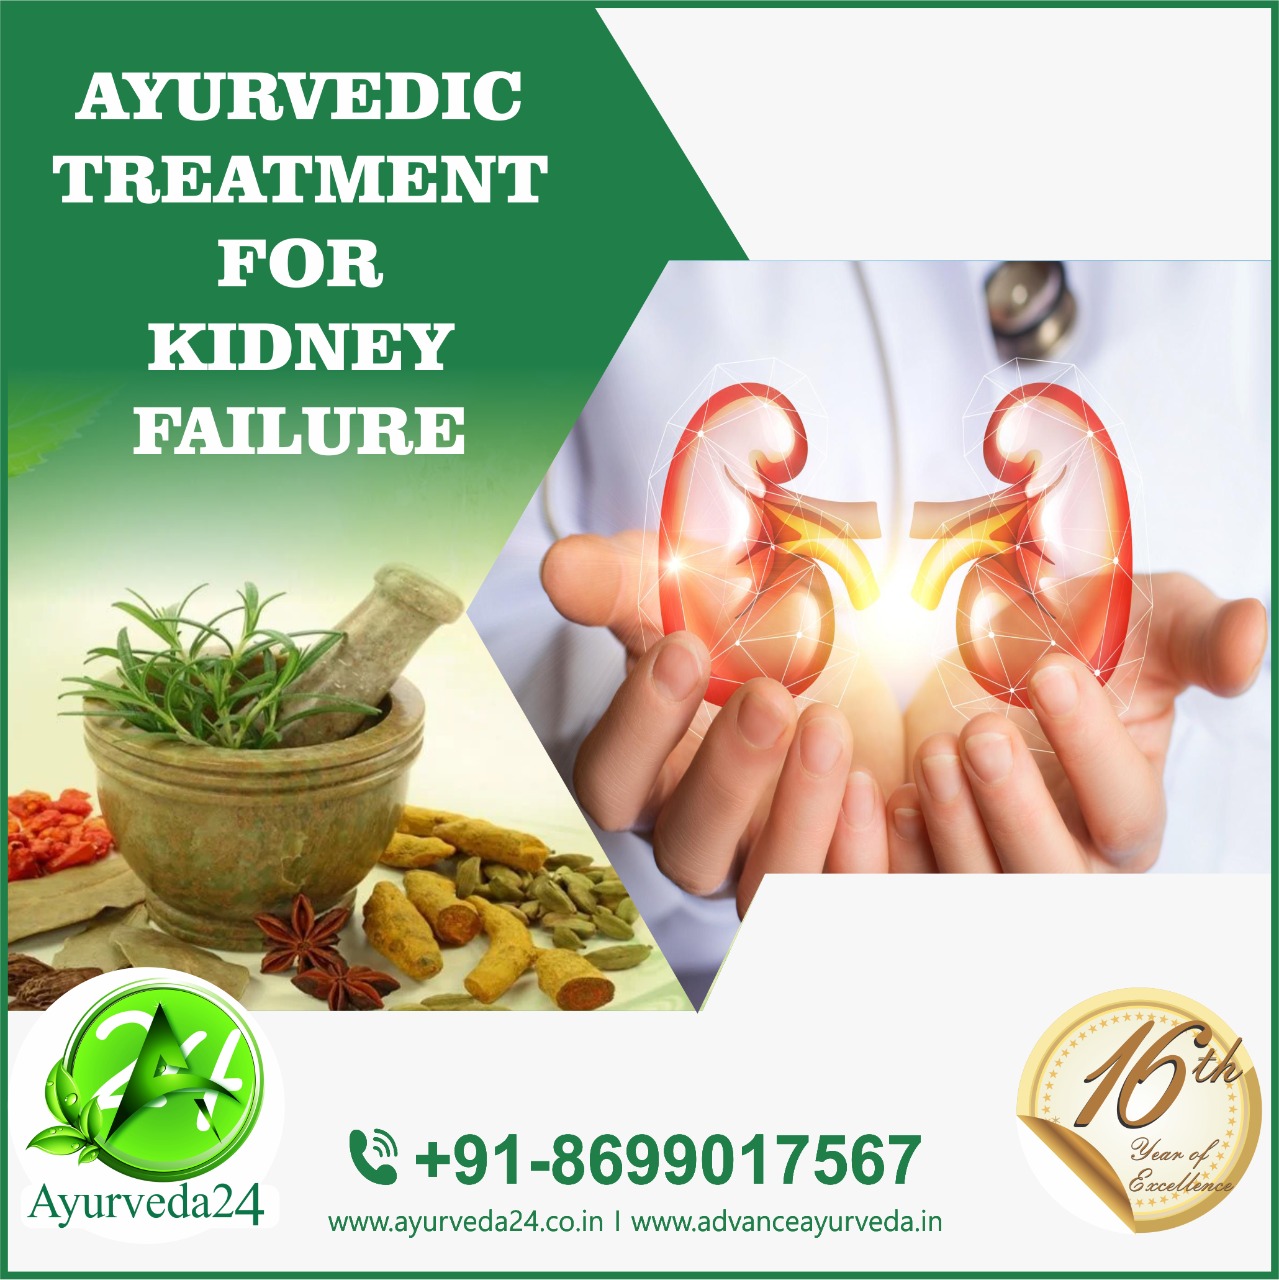 Ayurvedic Treatment For Kidney Failure | Ayurvedic Treatment for Heart Disease